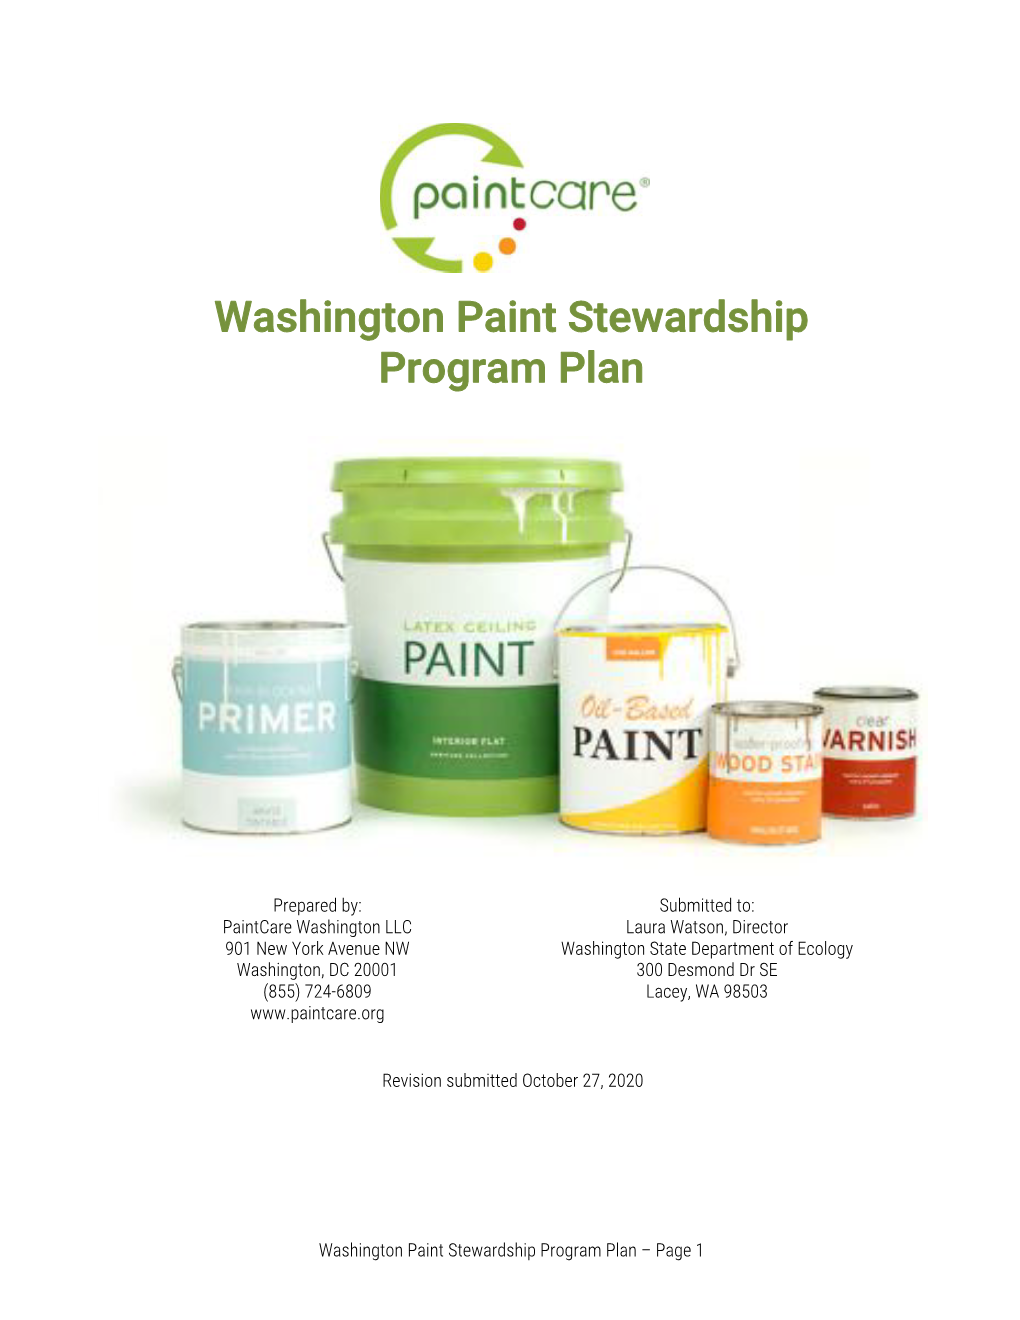 Washington Paint Stewardship Program Plan